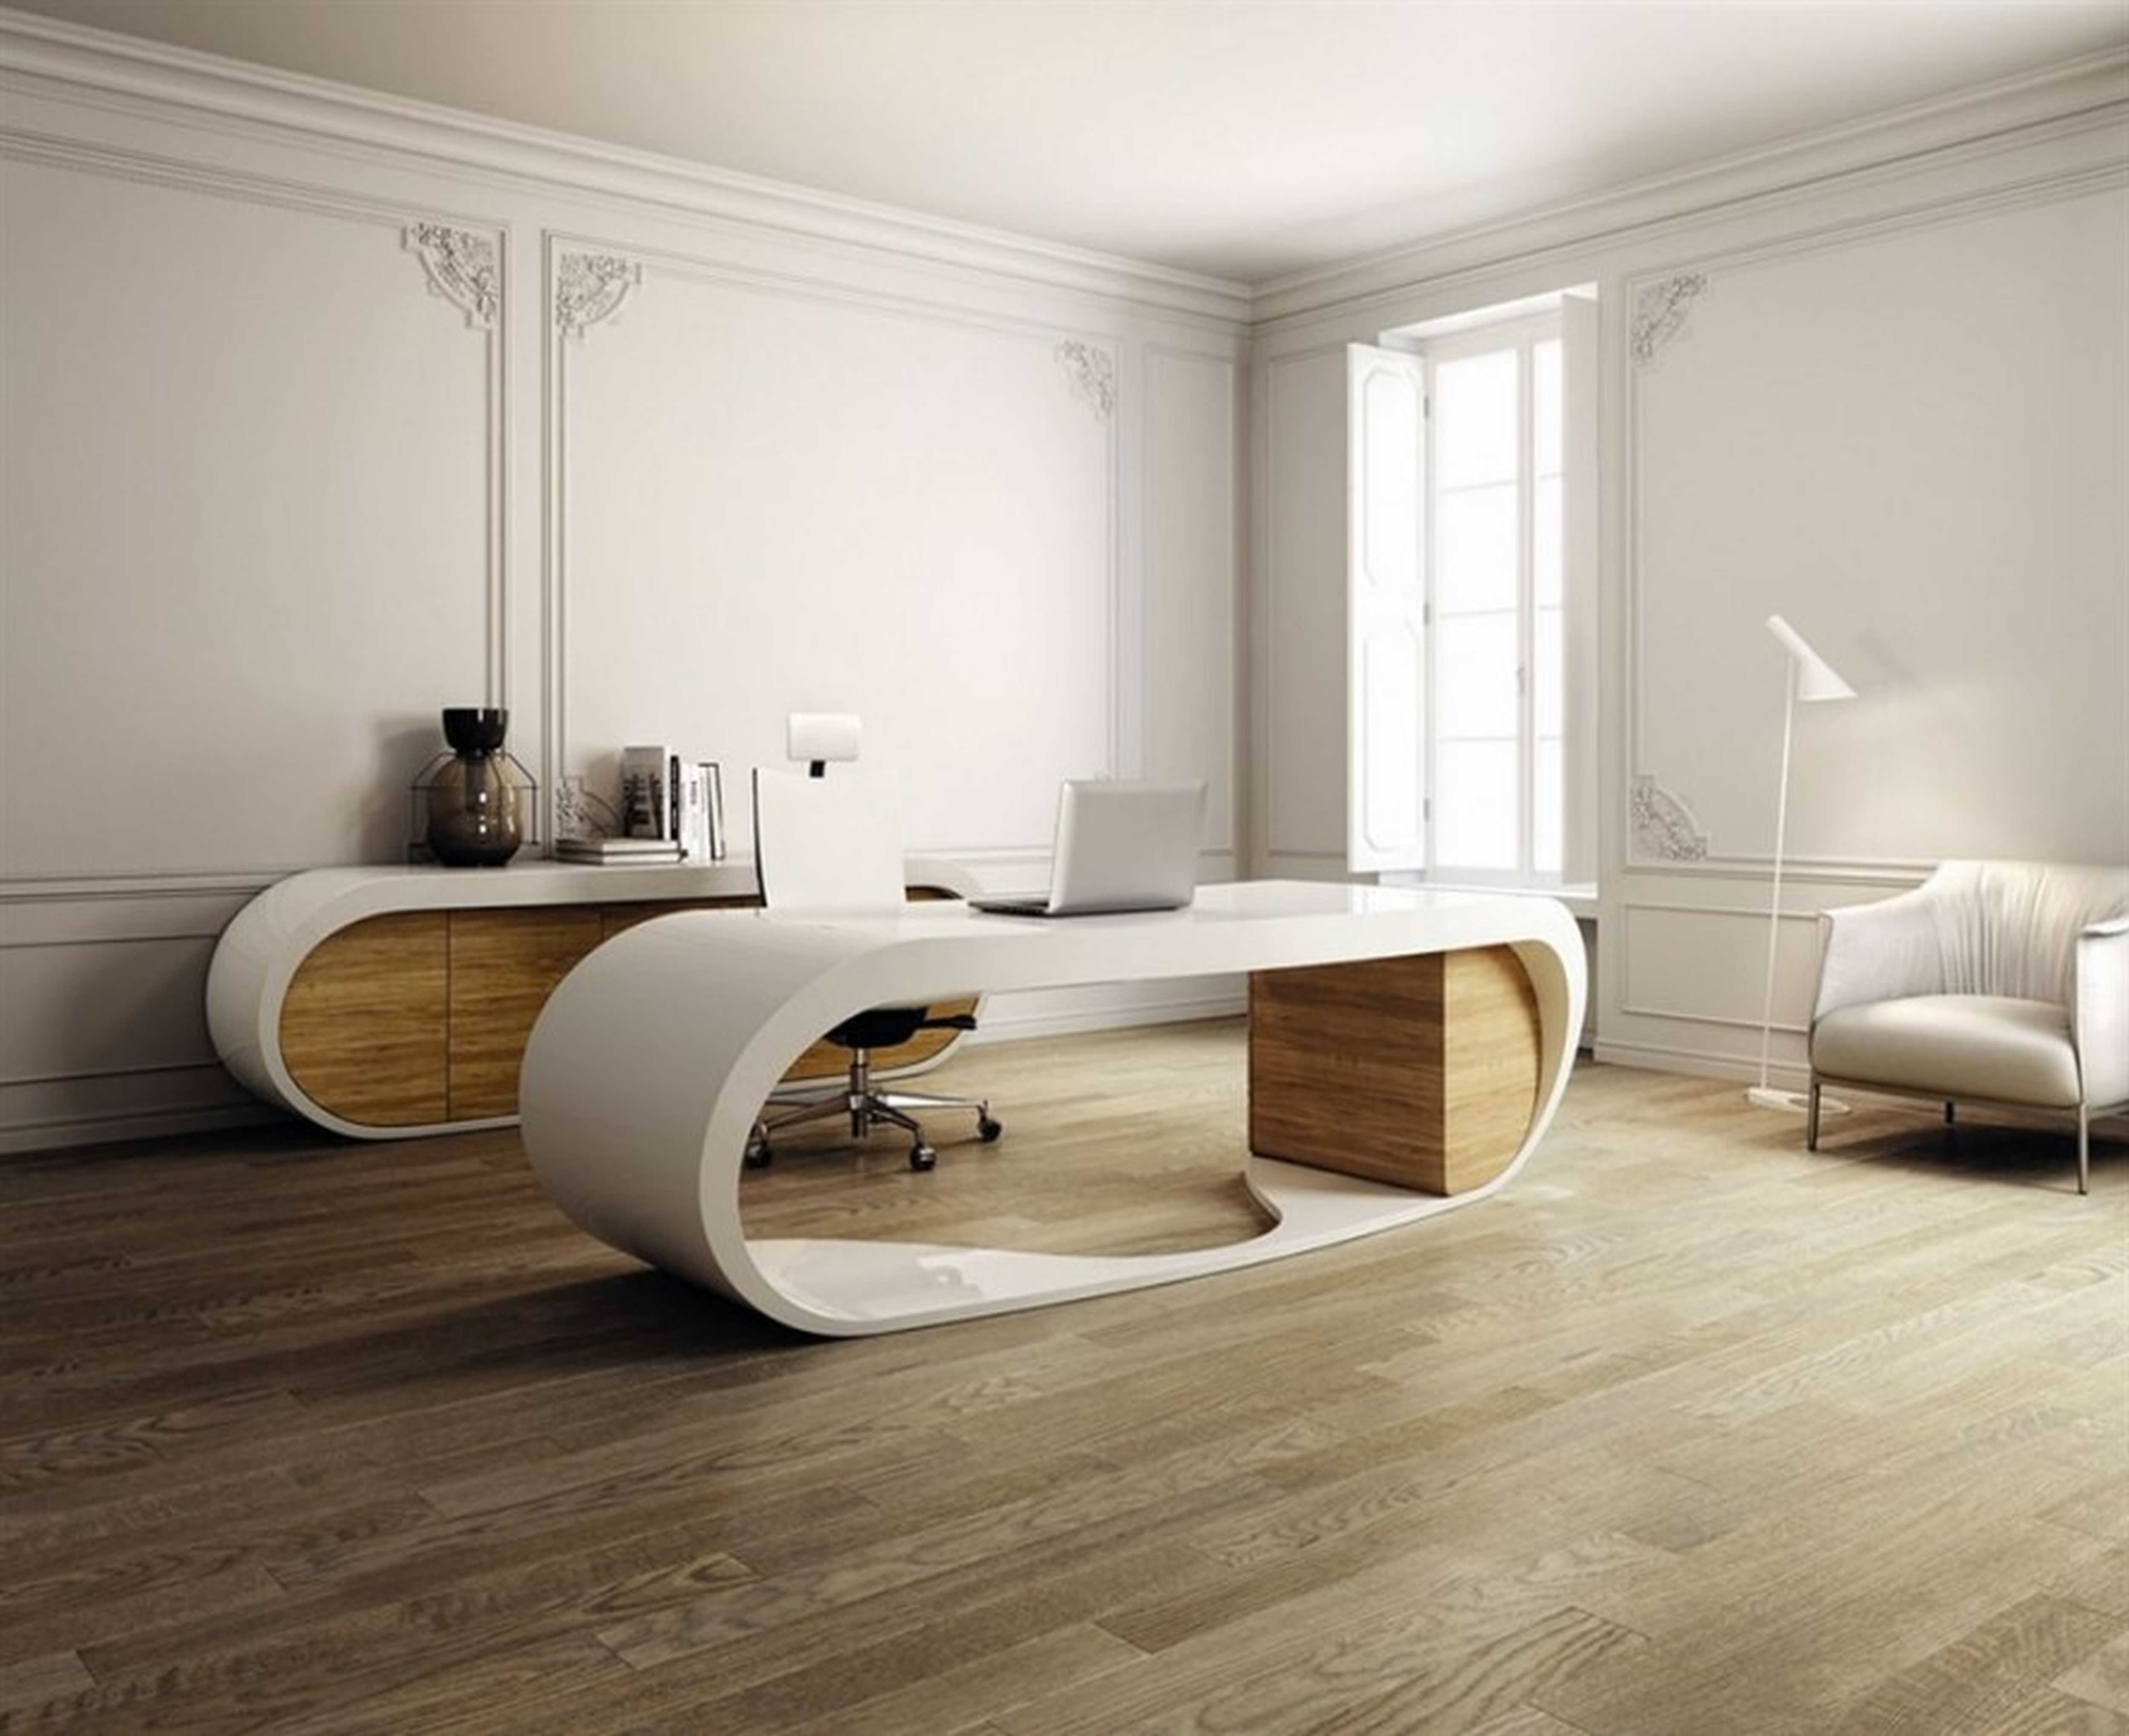 Discover Unique Furniture in Dubai: Jaw-Dropping Designs Await!